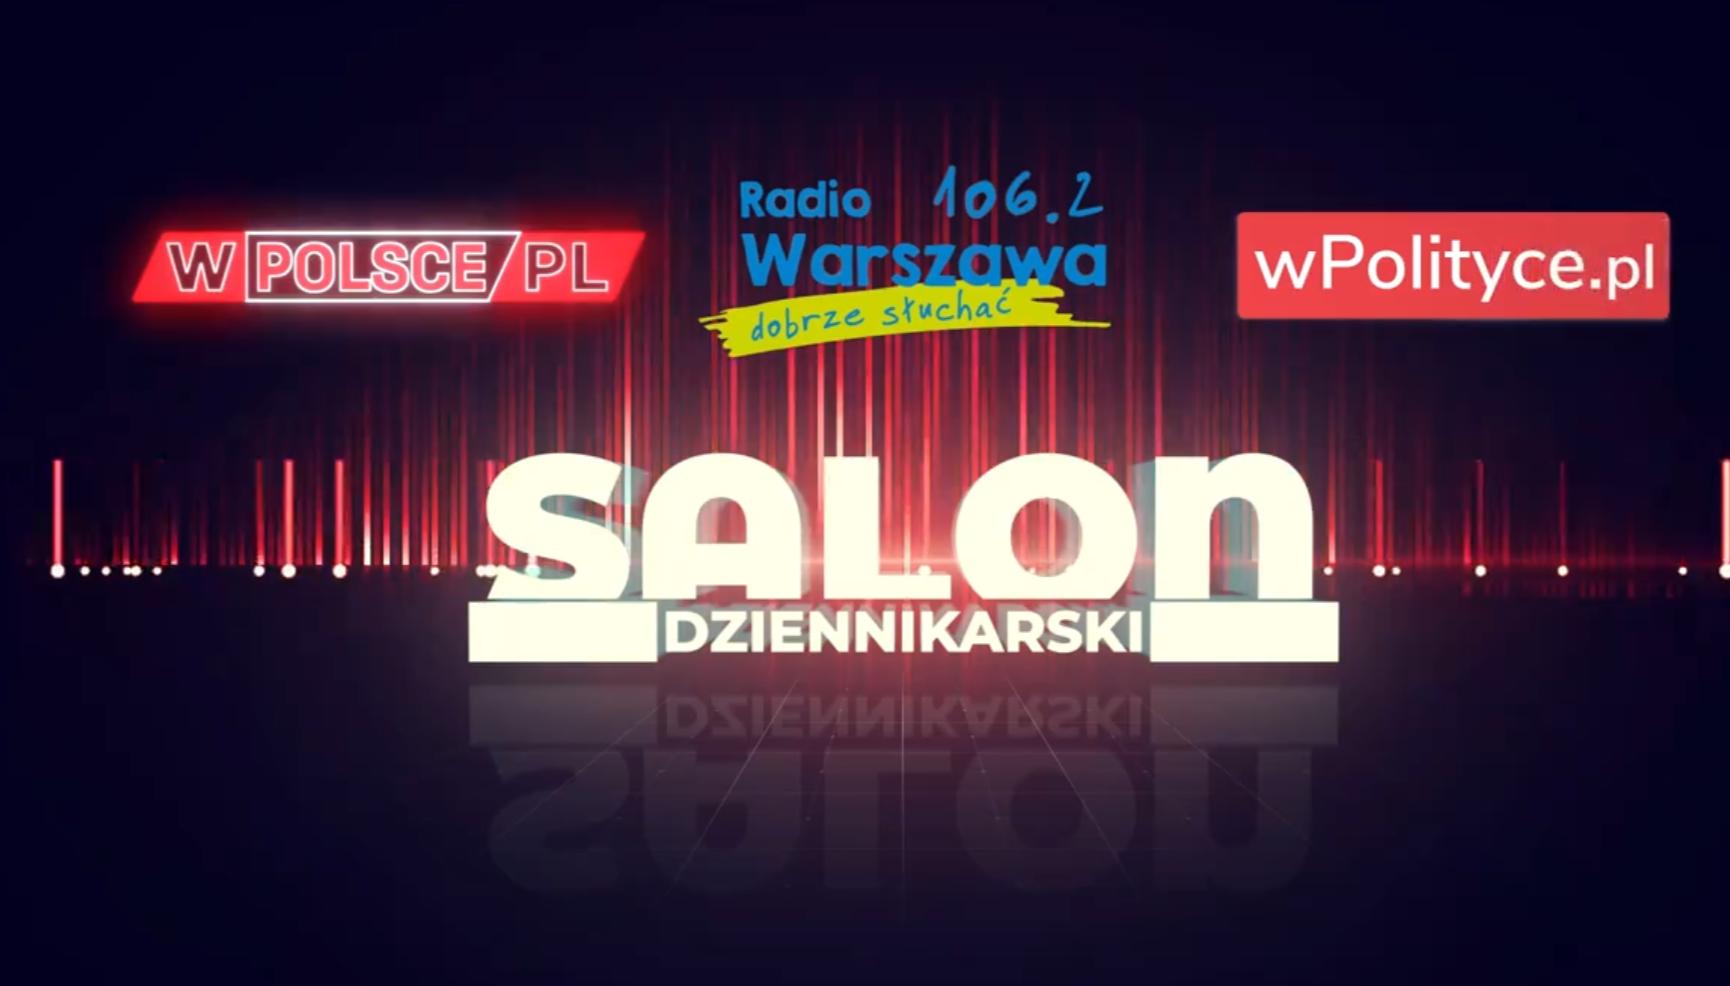 Journalism Salon now on wPolsce.pl!  Saturday 9.15